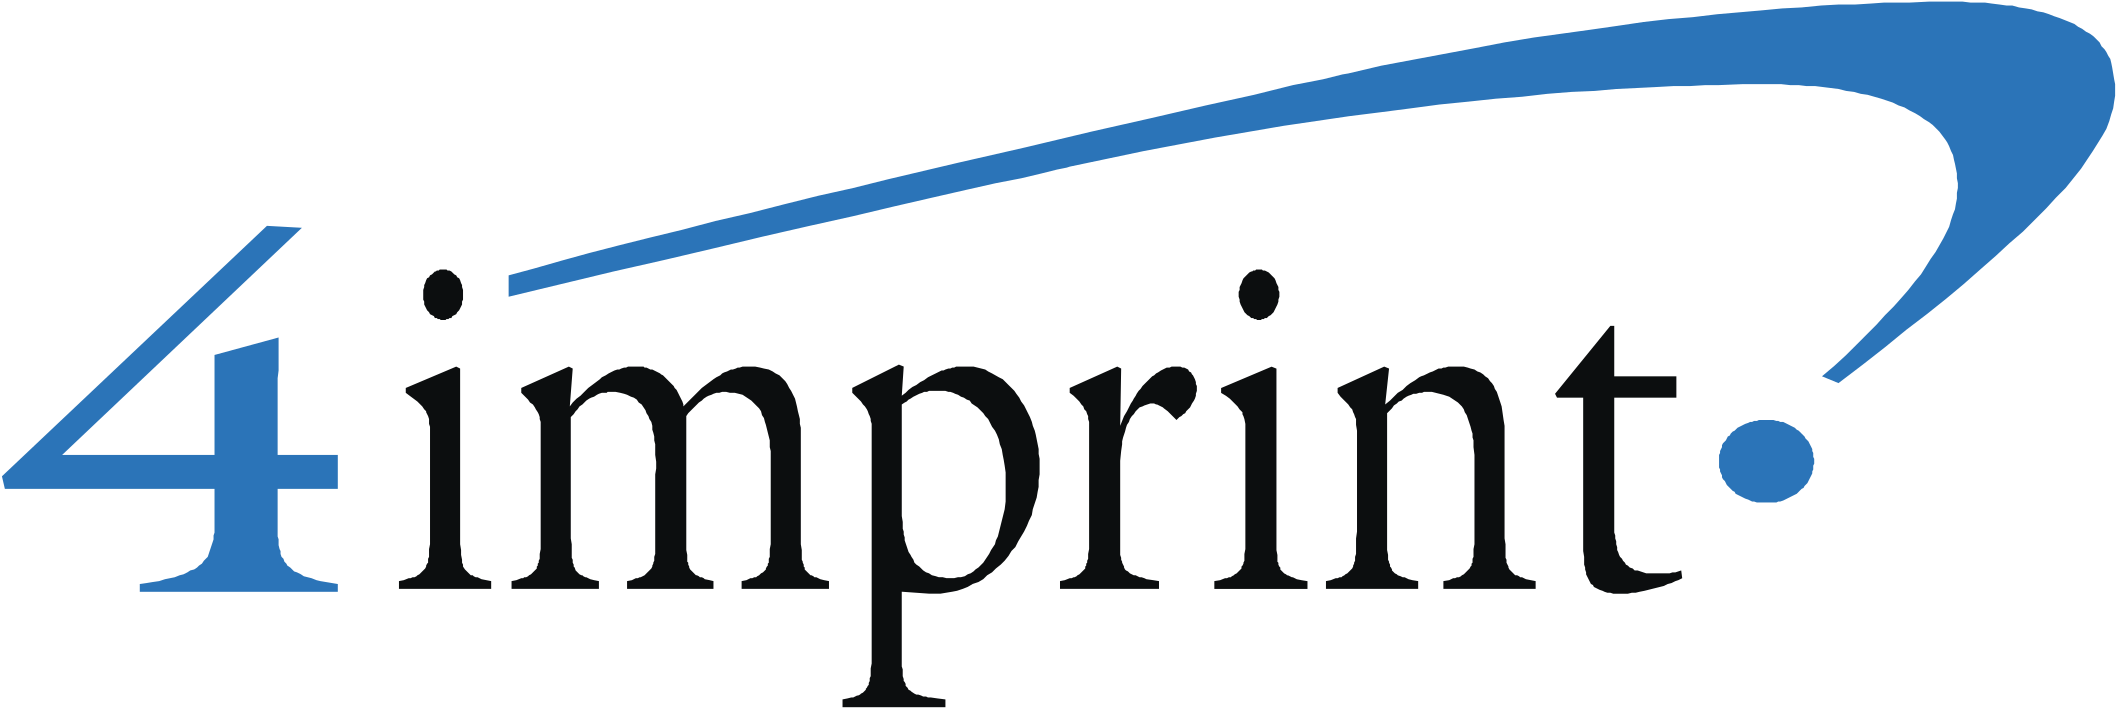 4imprint Logo Png Transparent - Stretchy Phone Case (2400x2400), Png Download